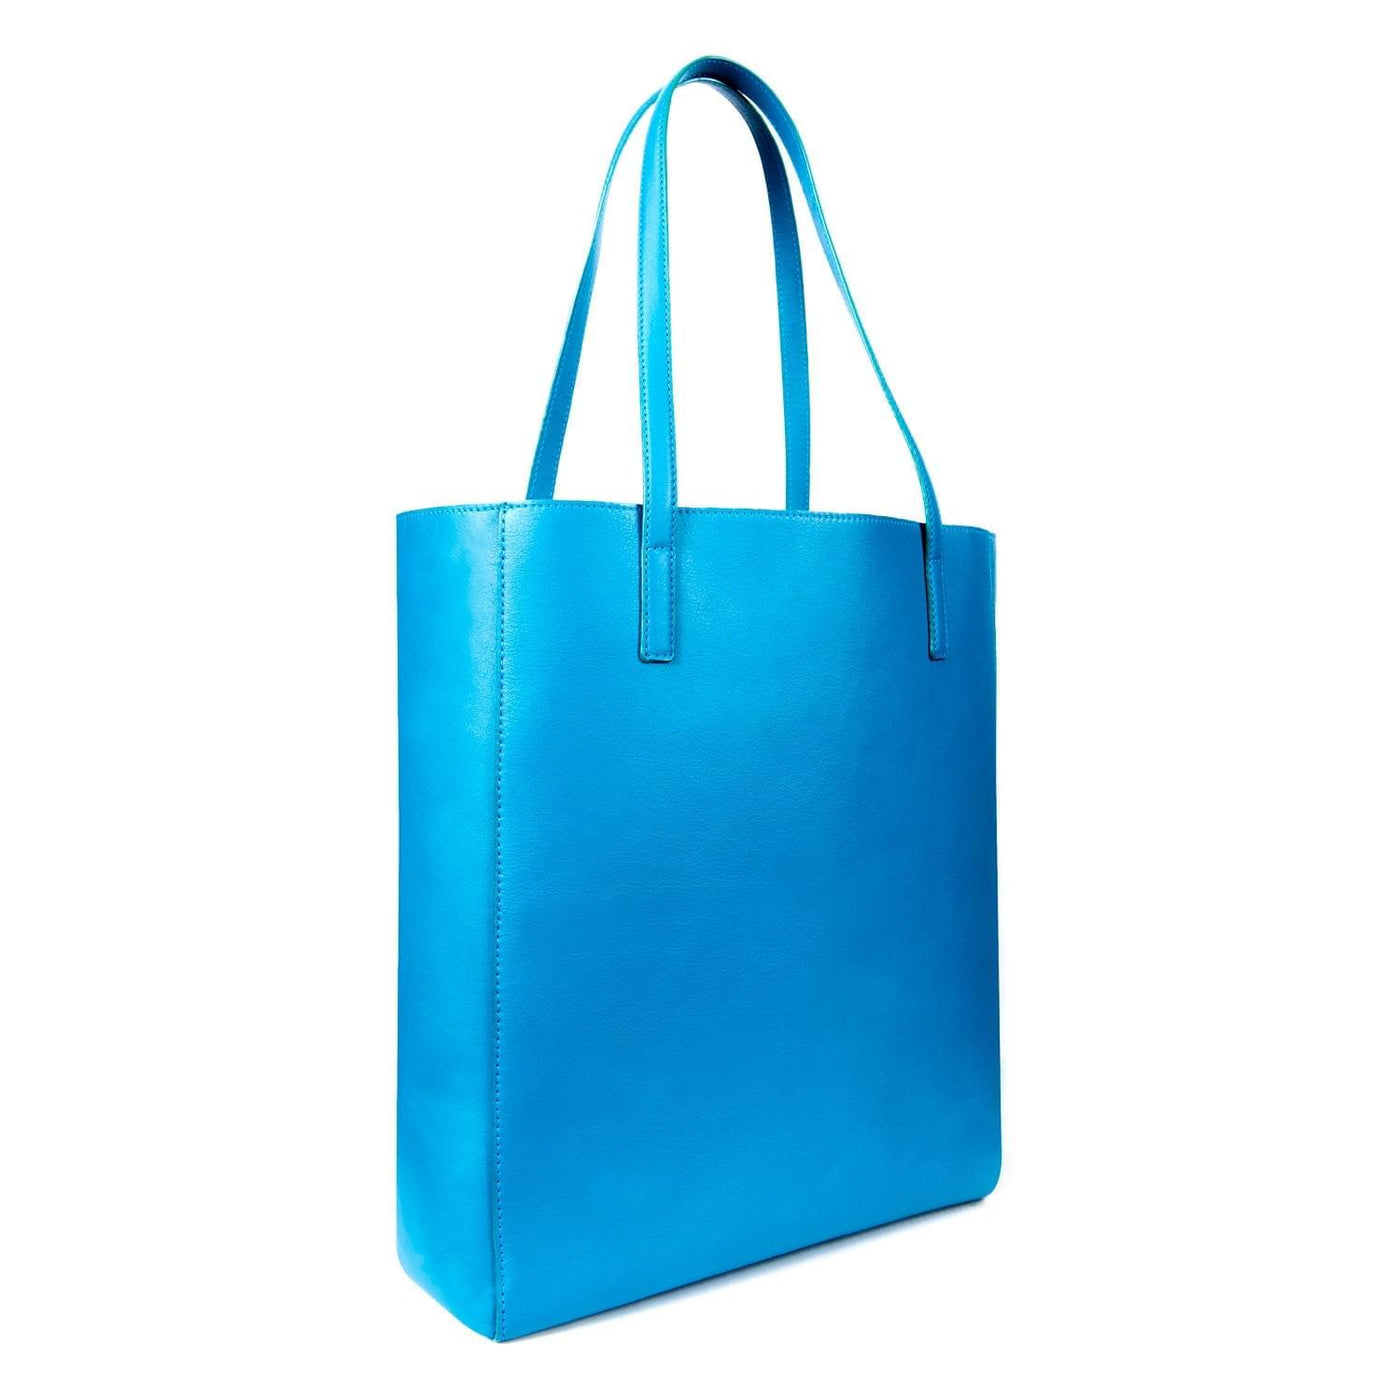 Grab n Go Aqua Tote - Women's tote bag for everyday use